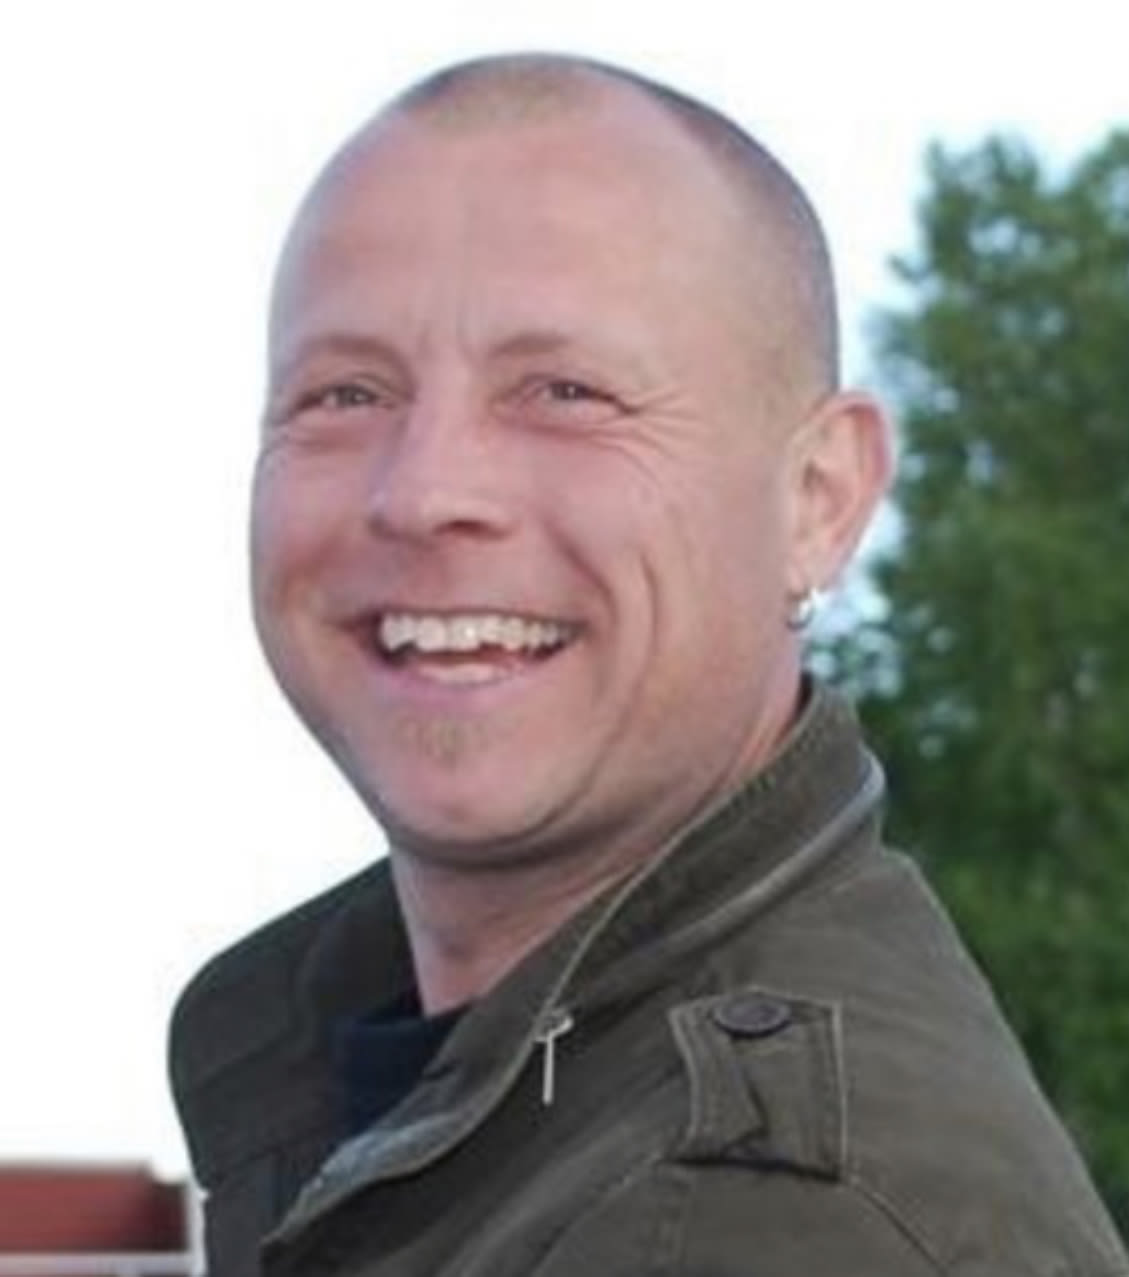 Erik Sundström